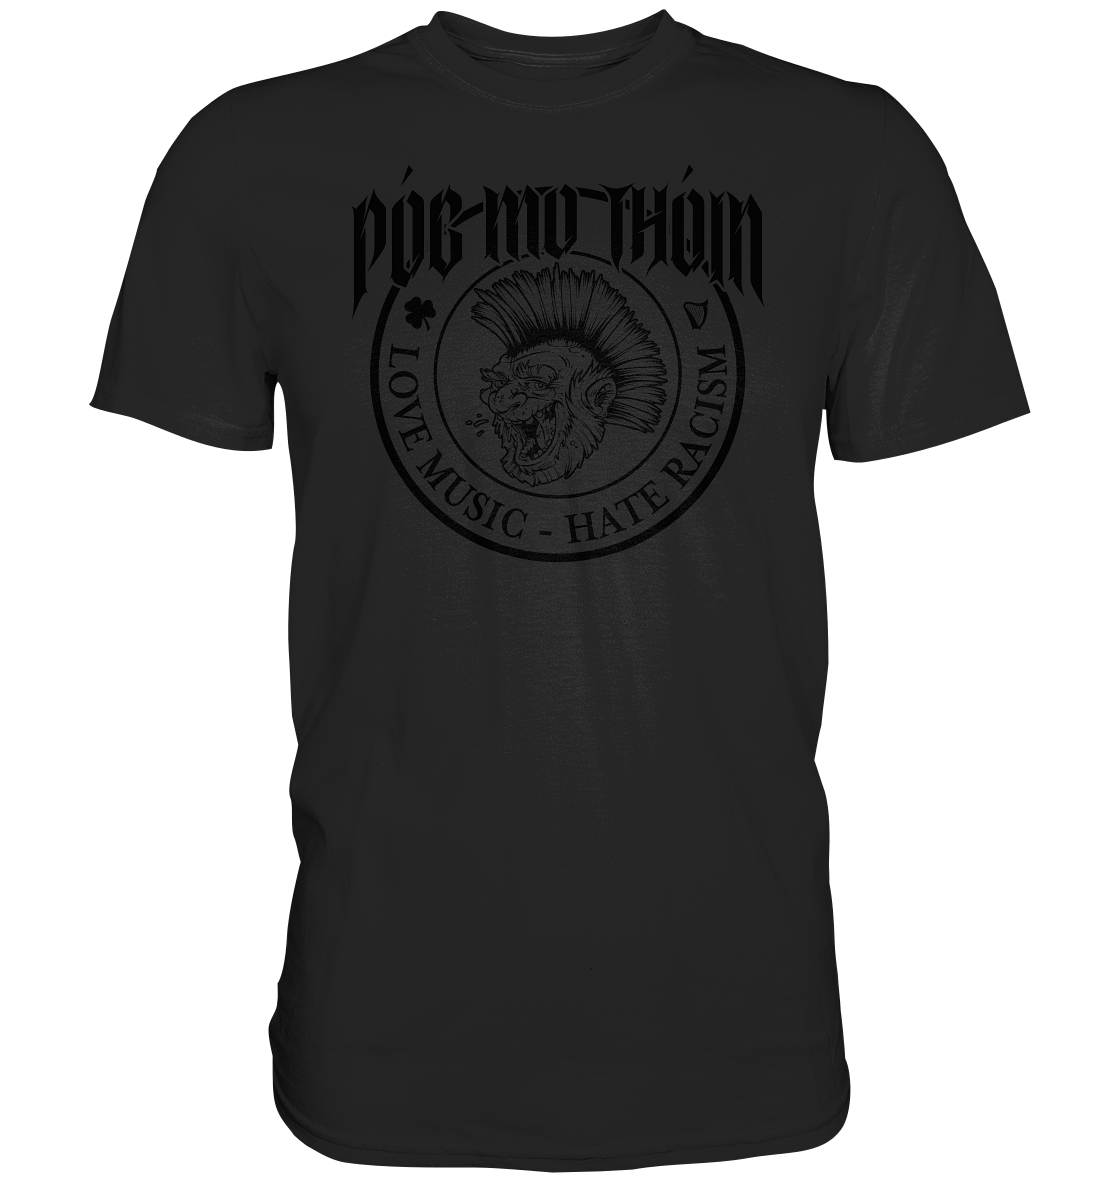 Póg Mo Thóin Streetwear "Love Music - Hate Racism" - Premium Shirt